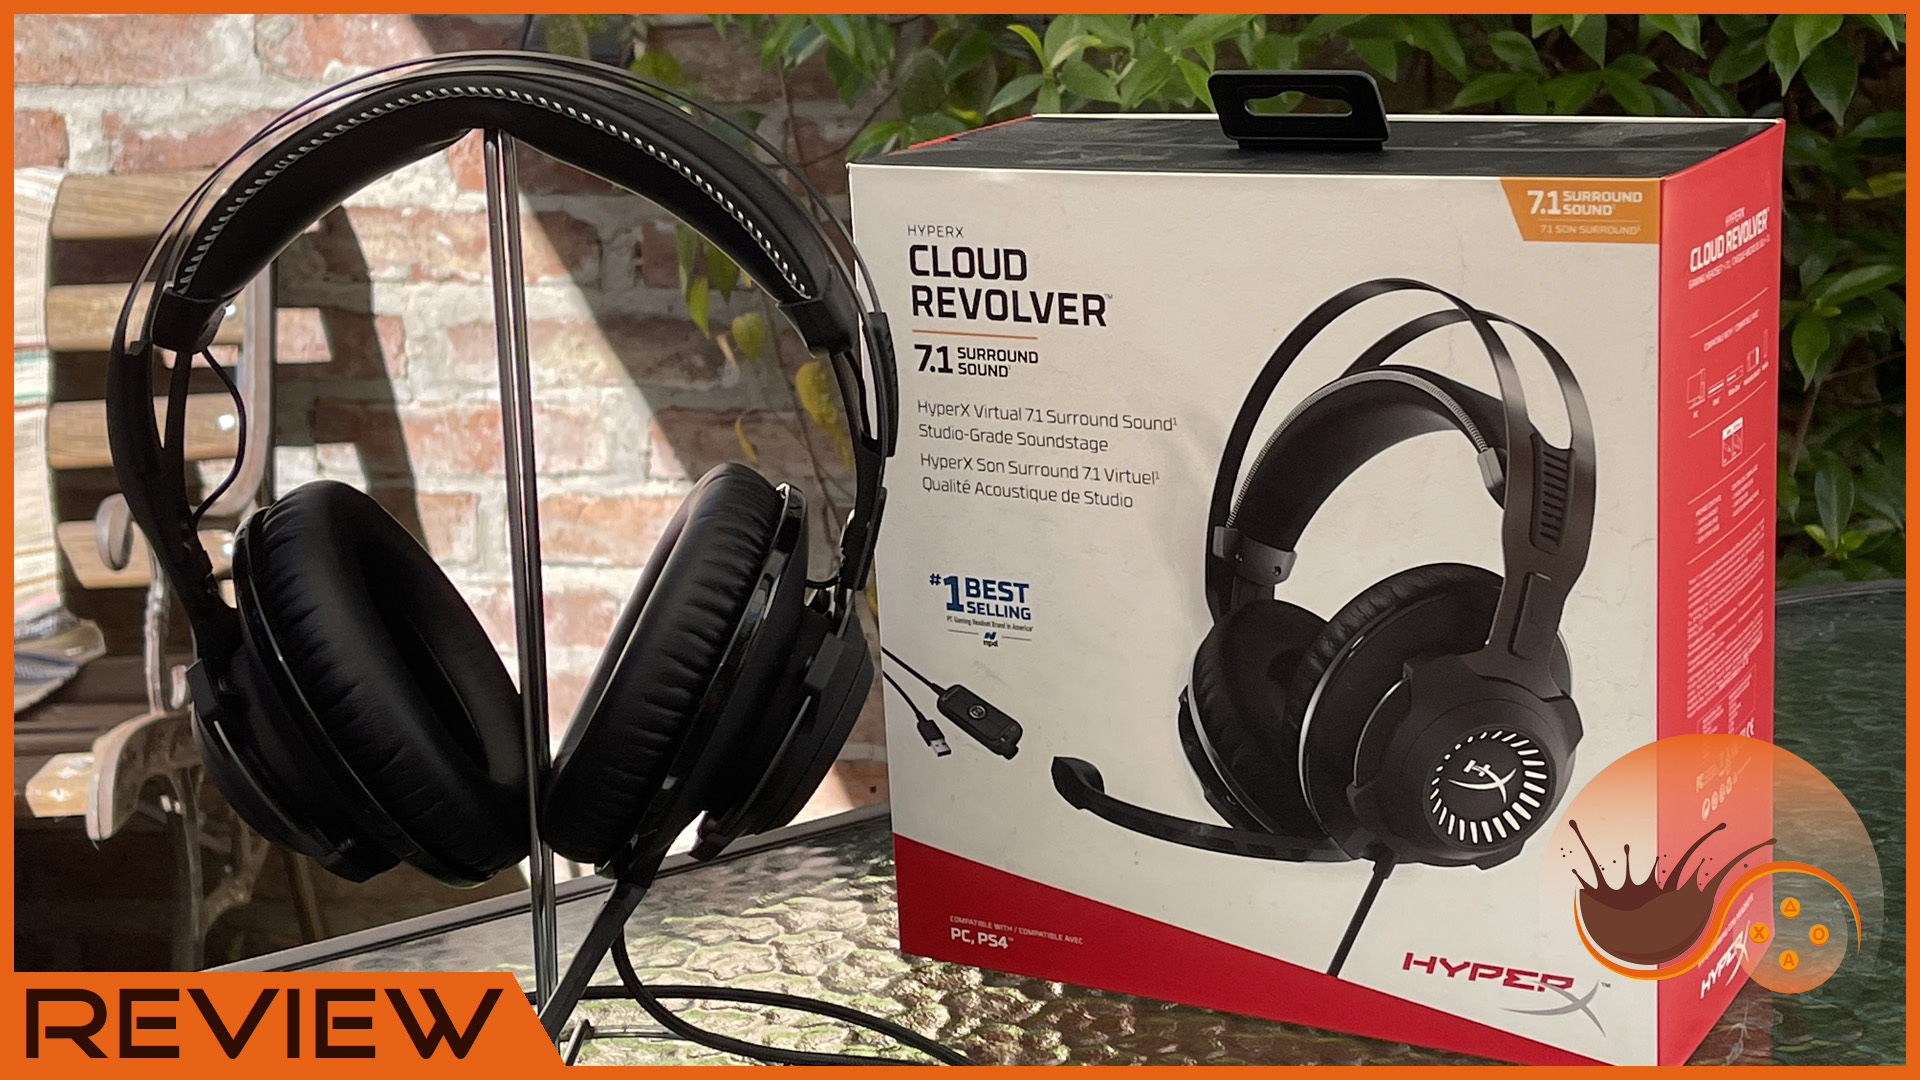 Cloud Revolver Headset with HyperX 7.1 Surround Sound